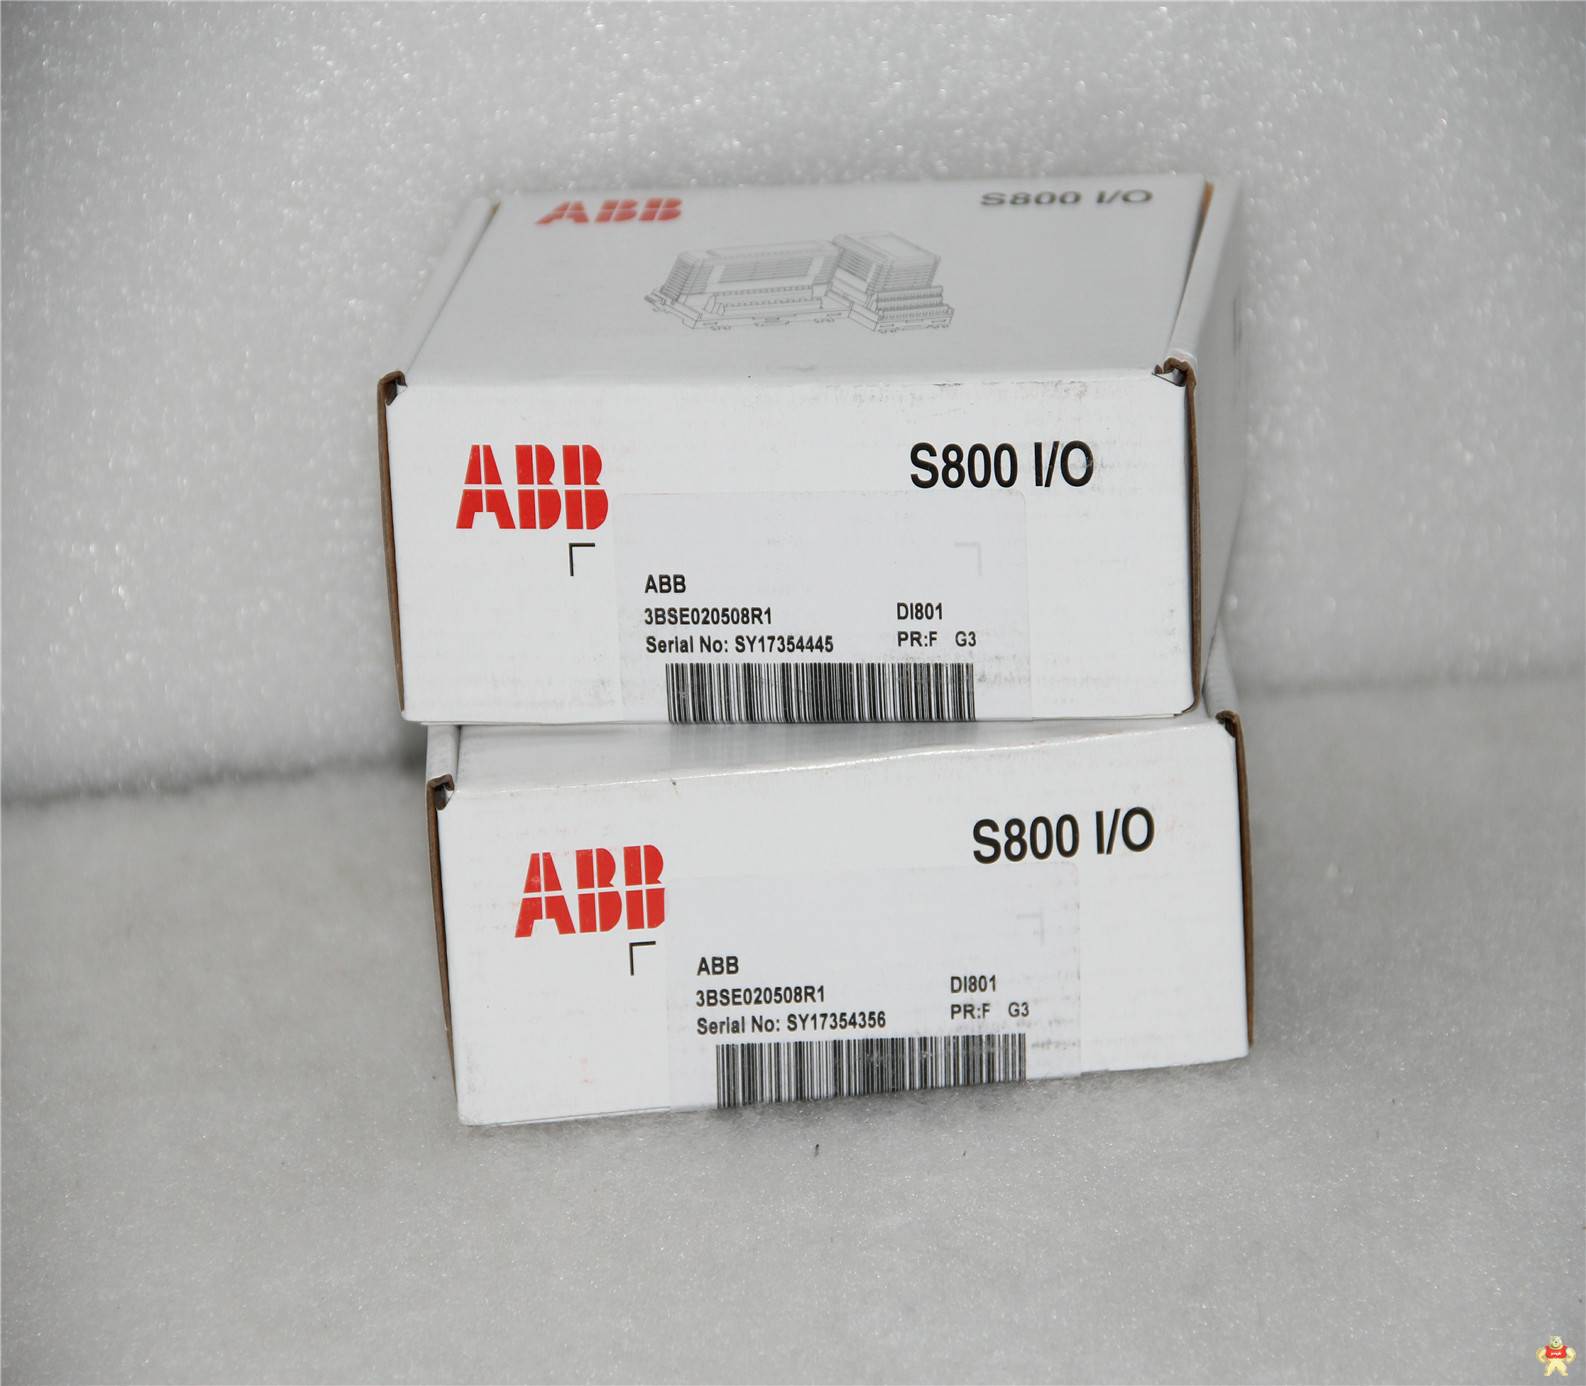 ABBIMSET01  模拟量模块 折扣不断 PLC,ABB,现货